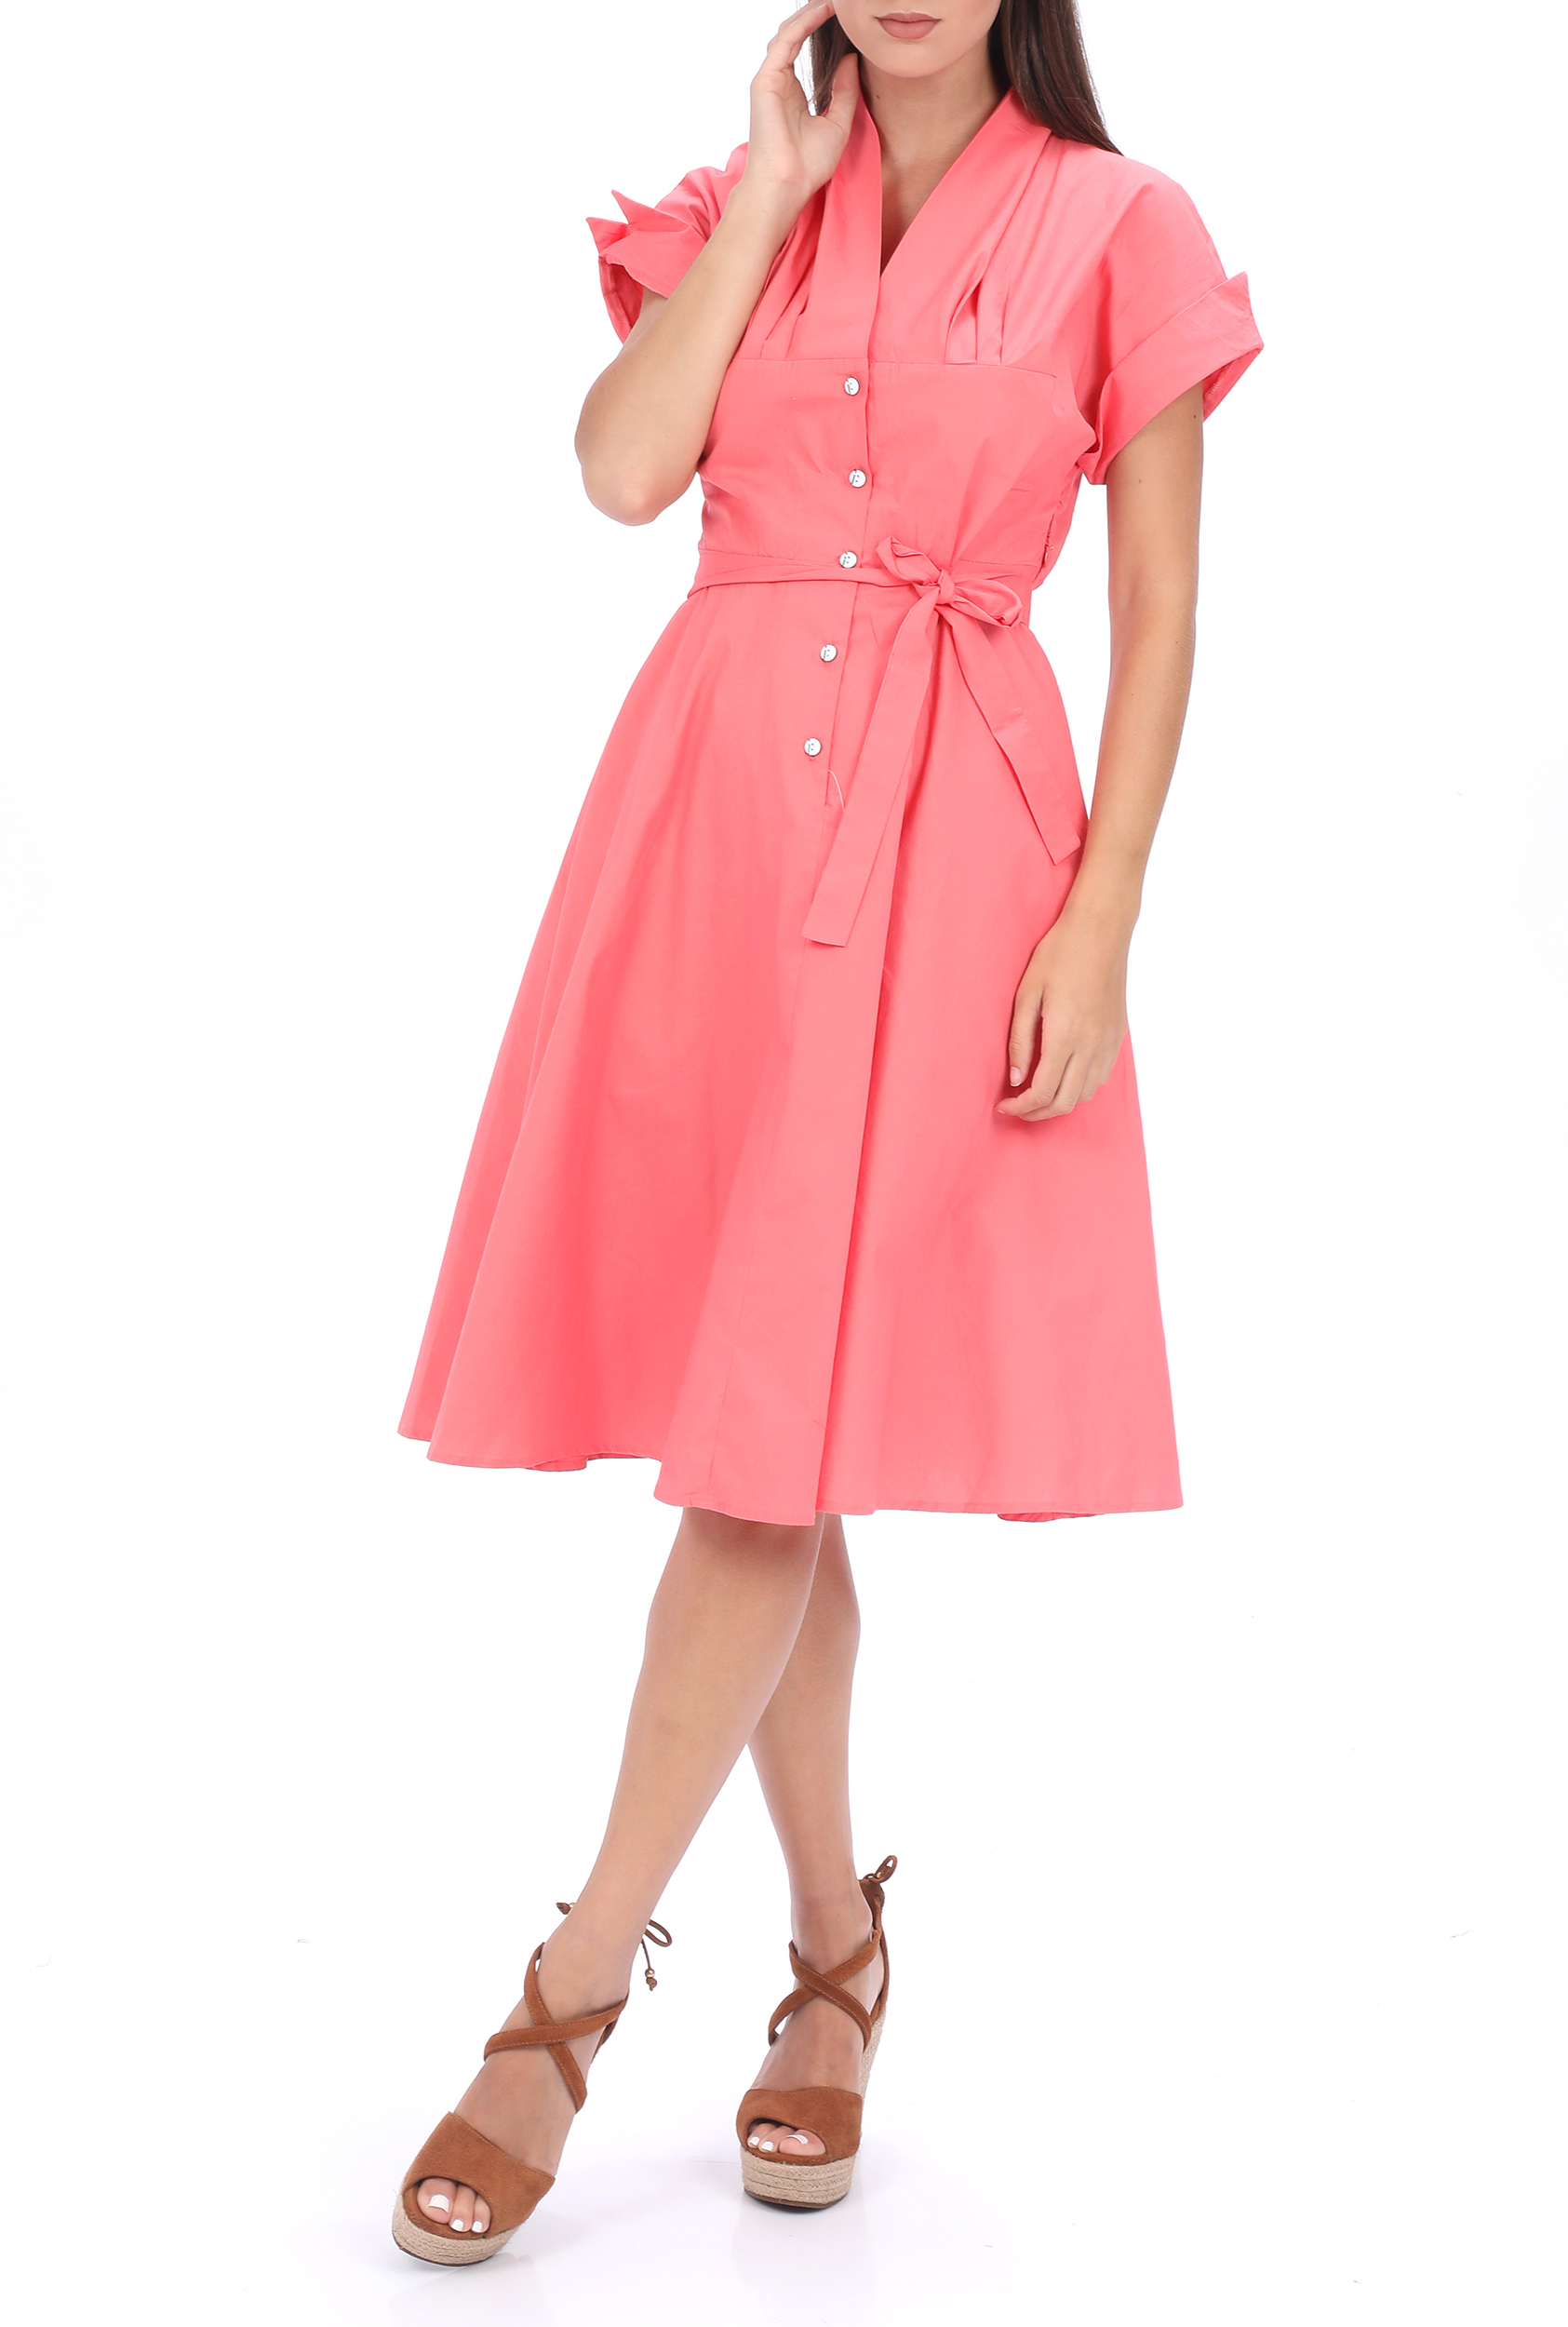 MOLLY BRACKEN – Γυναικειο midi φορεμα MOLLY BRACKEN ροζ